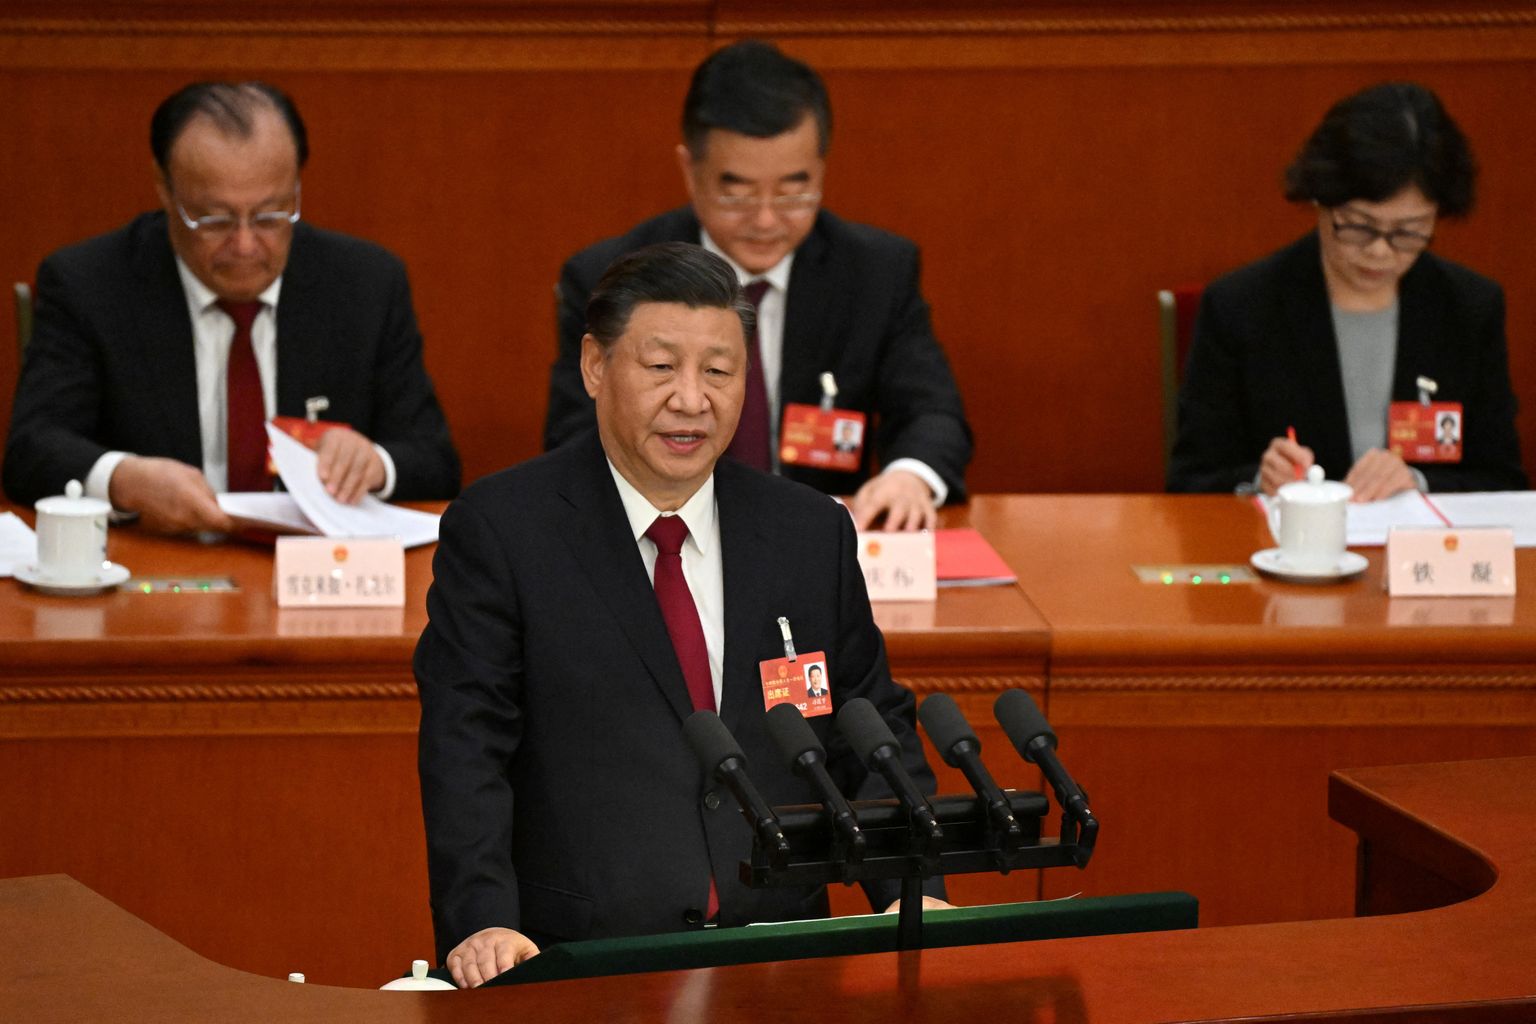 Hiina president Xi Jinping esinemas parlamendis.